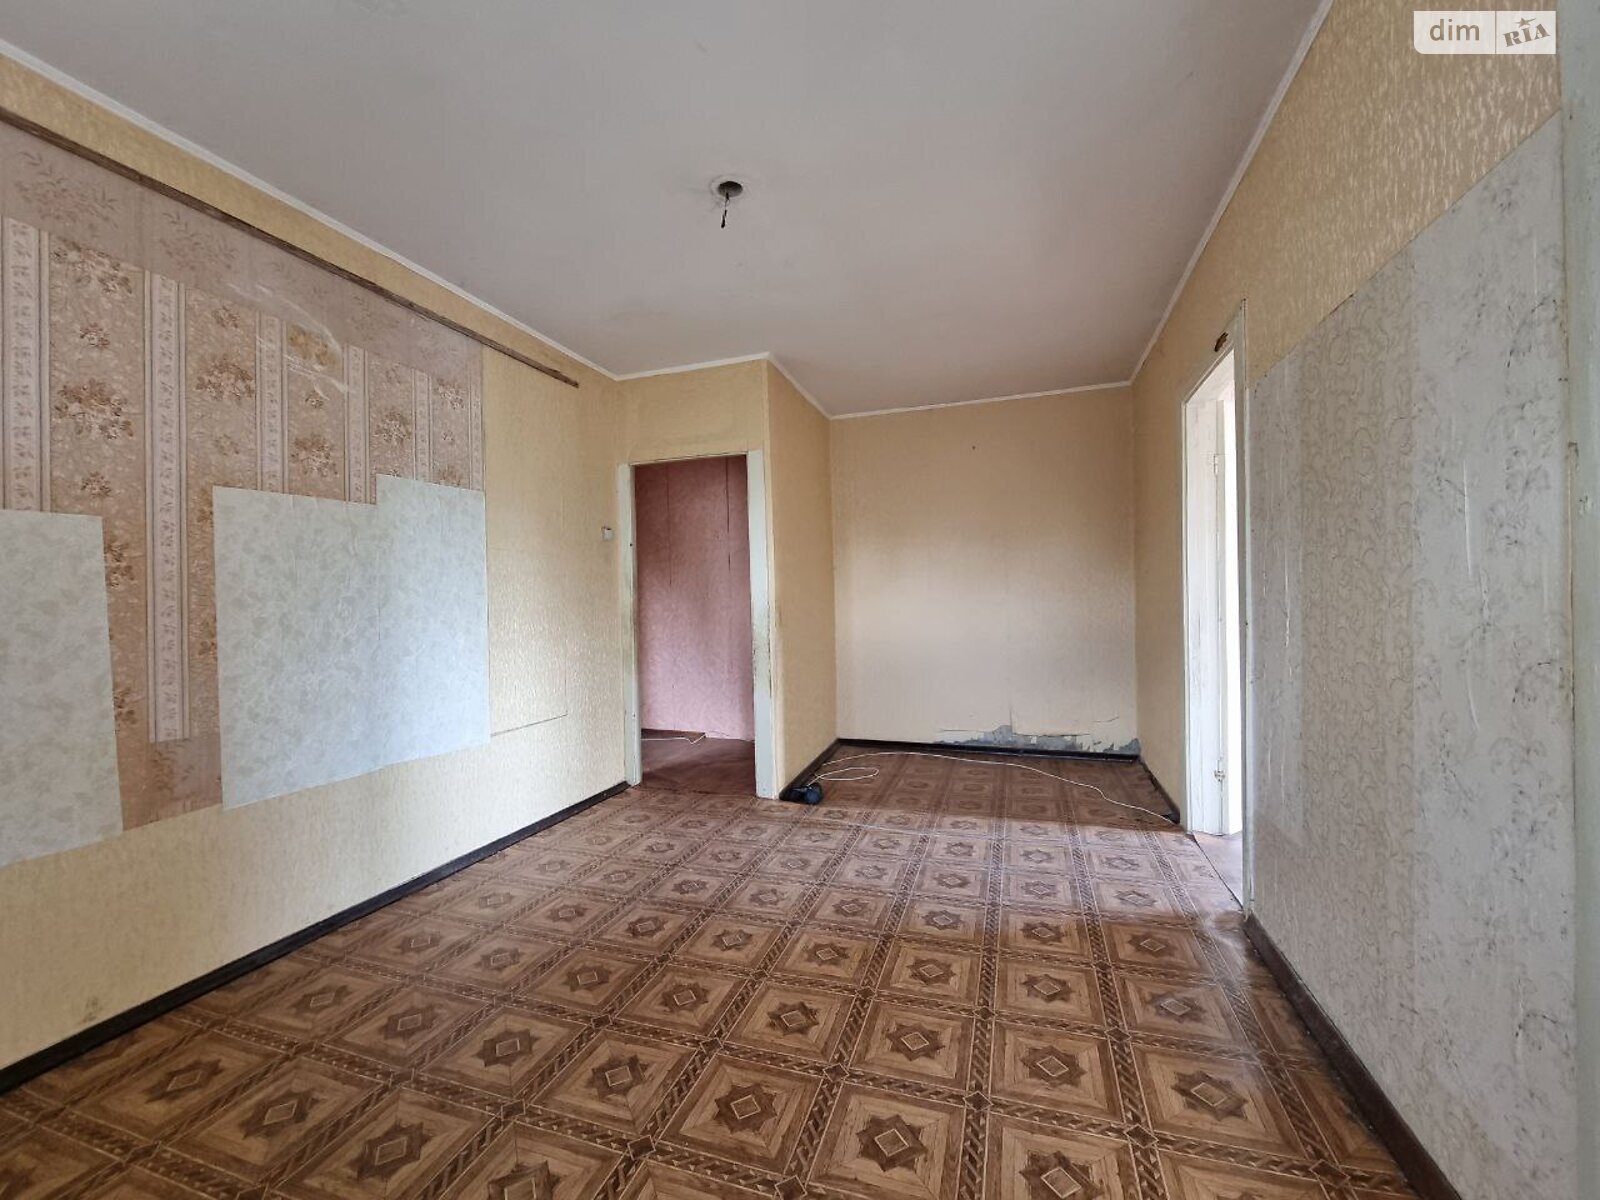 Продажа трехкомнатной квартиры в Чернигове, на ул. Спасателей 4, район Ремзавод фото 1